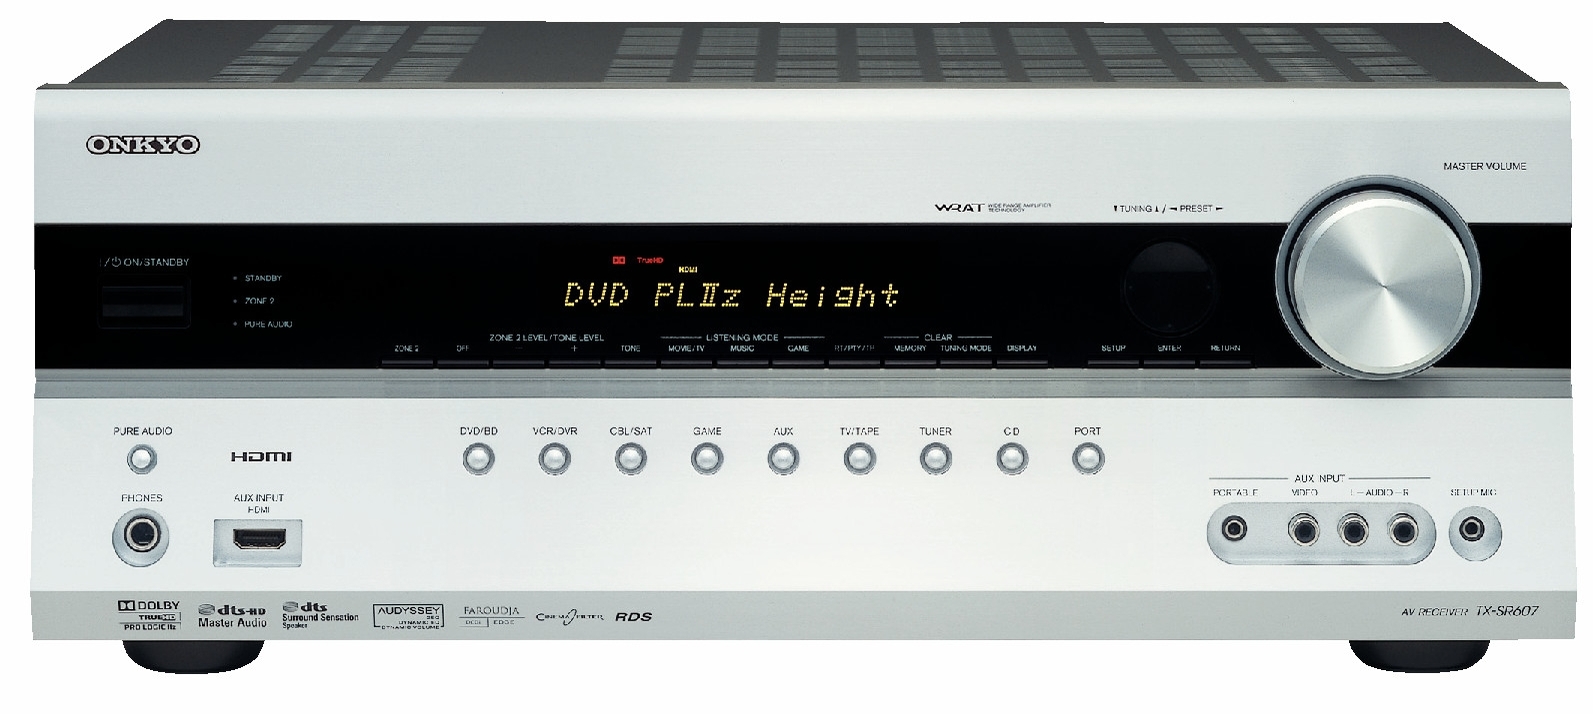 Onkyo TX-SR607 skal være verdens første hjemmekinoreceiver med Dolby Pro Logic IIz.